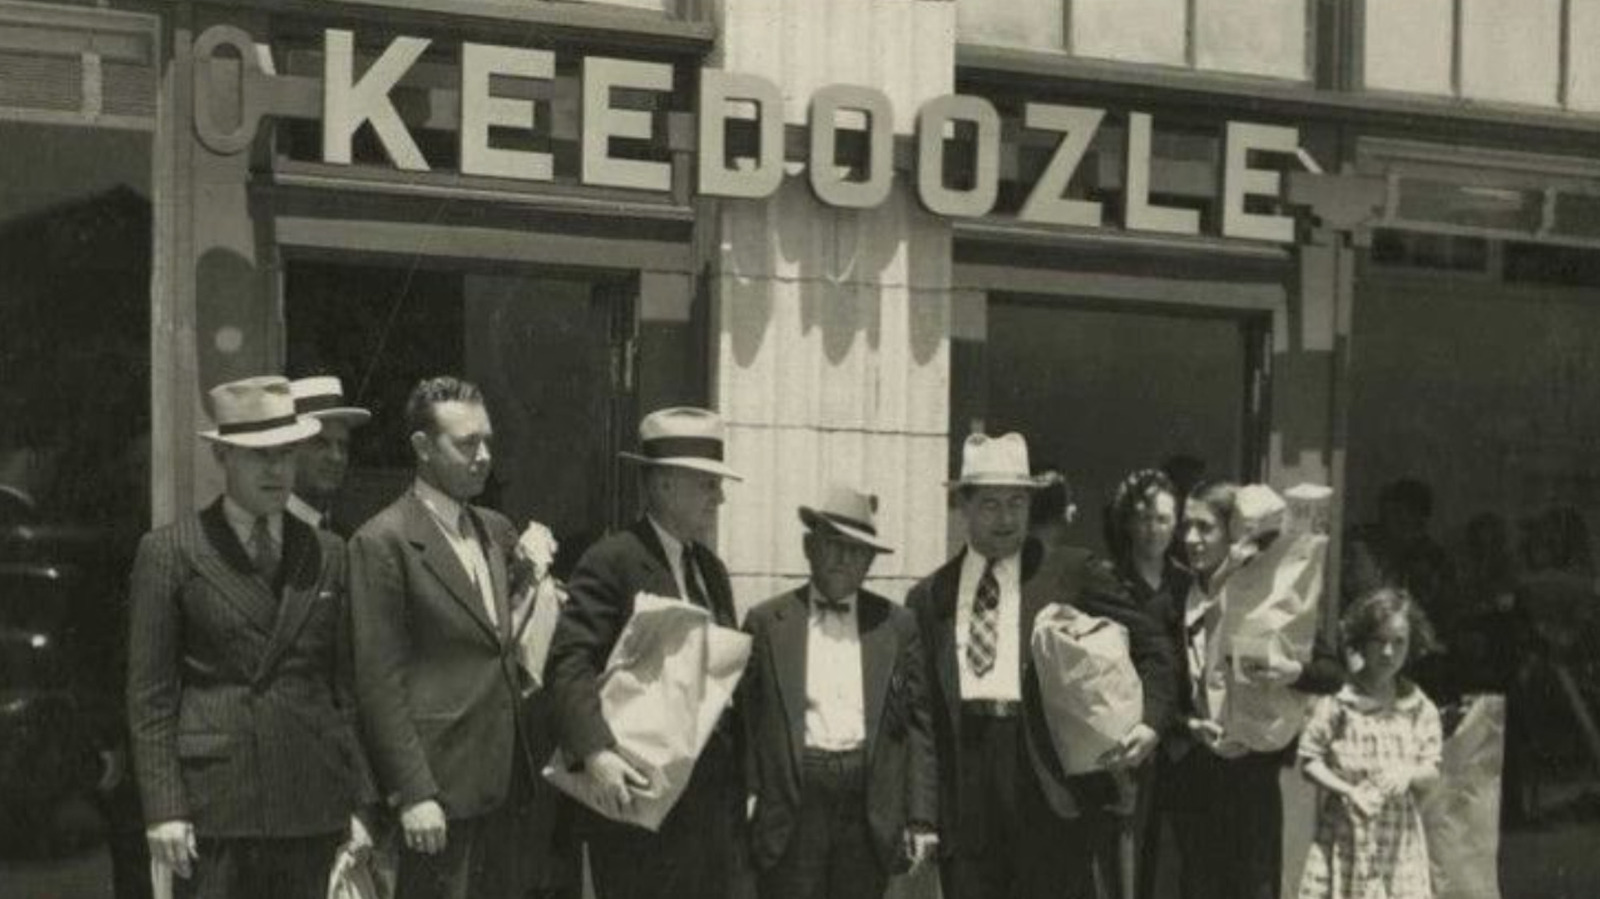 Keedoozle: The Retailer That Was Half Grocery Store and Half Vending Machine